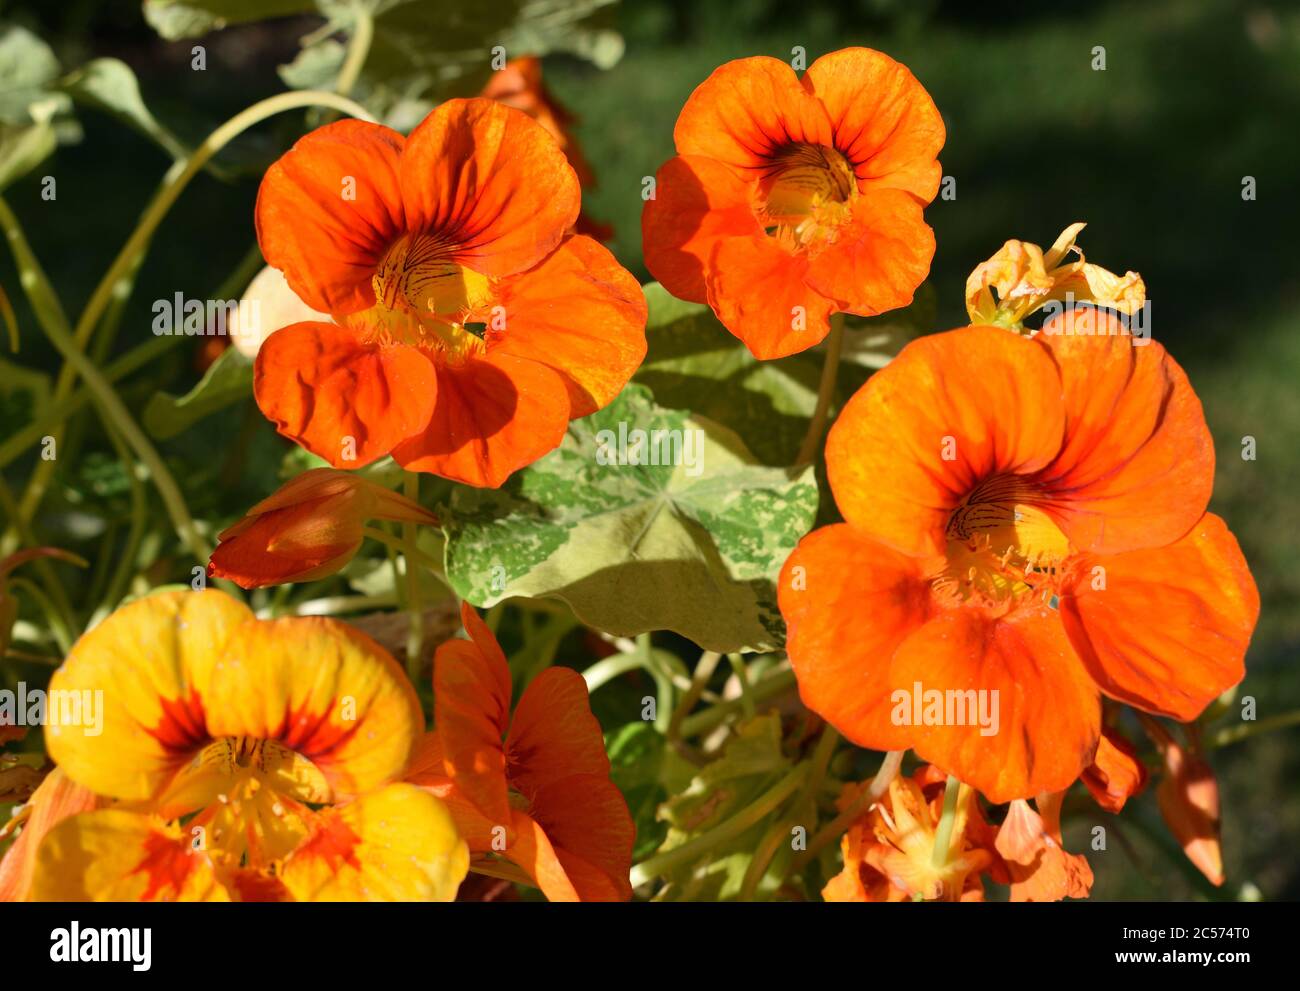 Nasturtium. Close up of orange flowers with yellow centres. Stock Photo